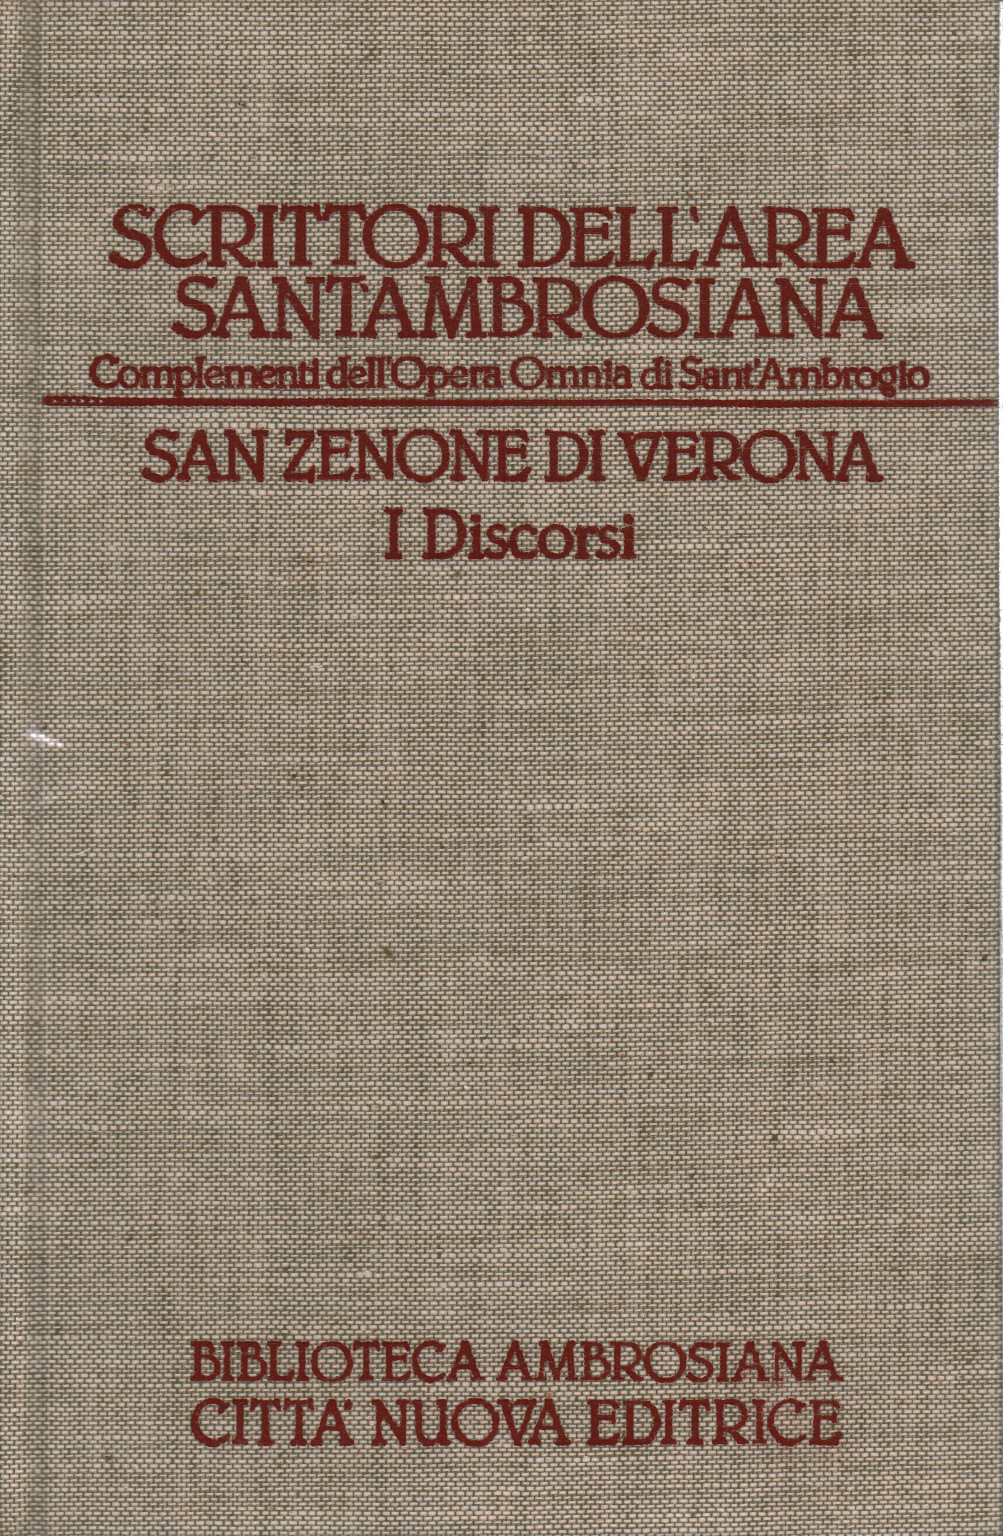 San Zenone of Verona. The Speeches